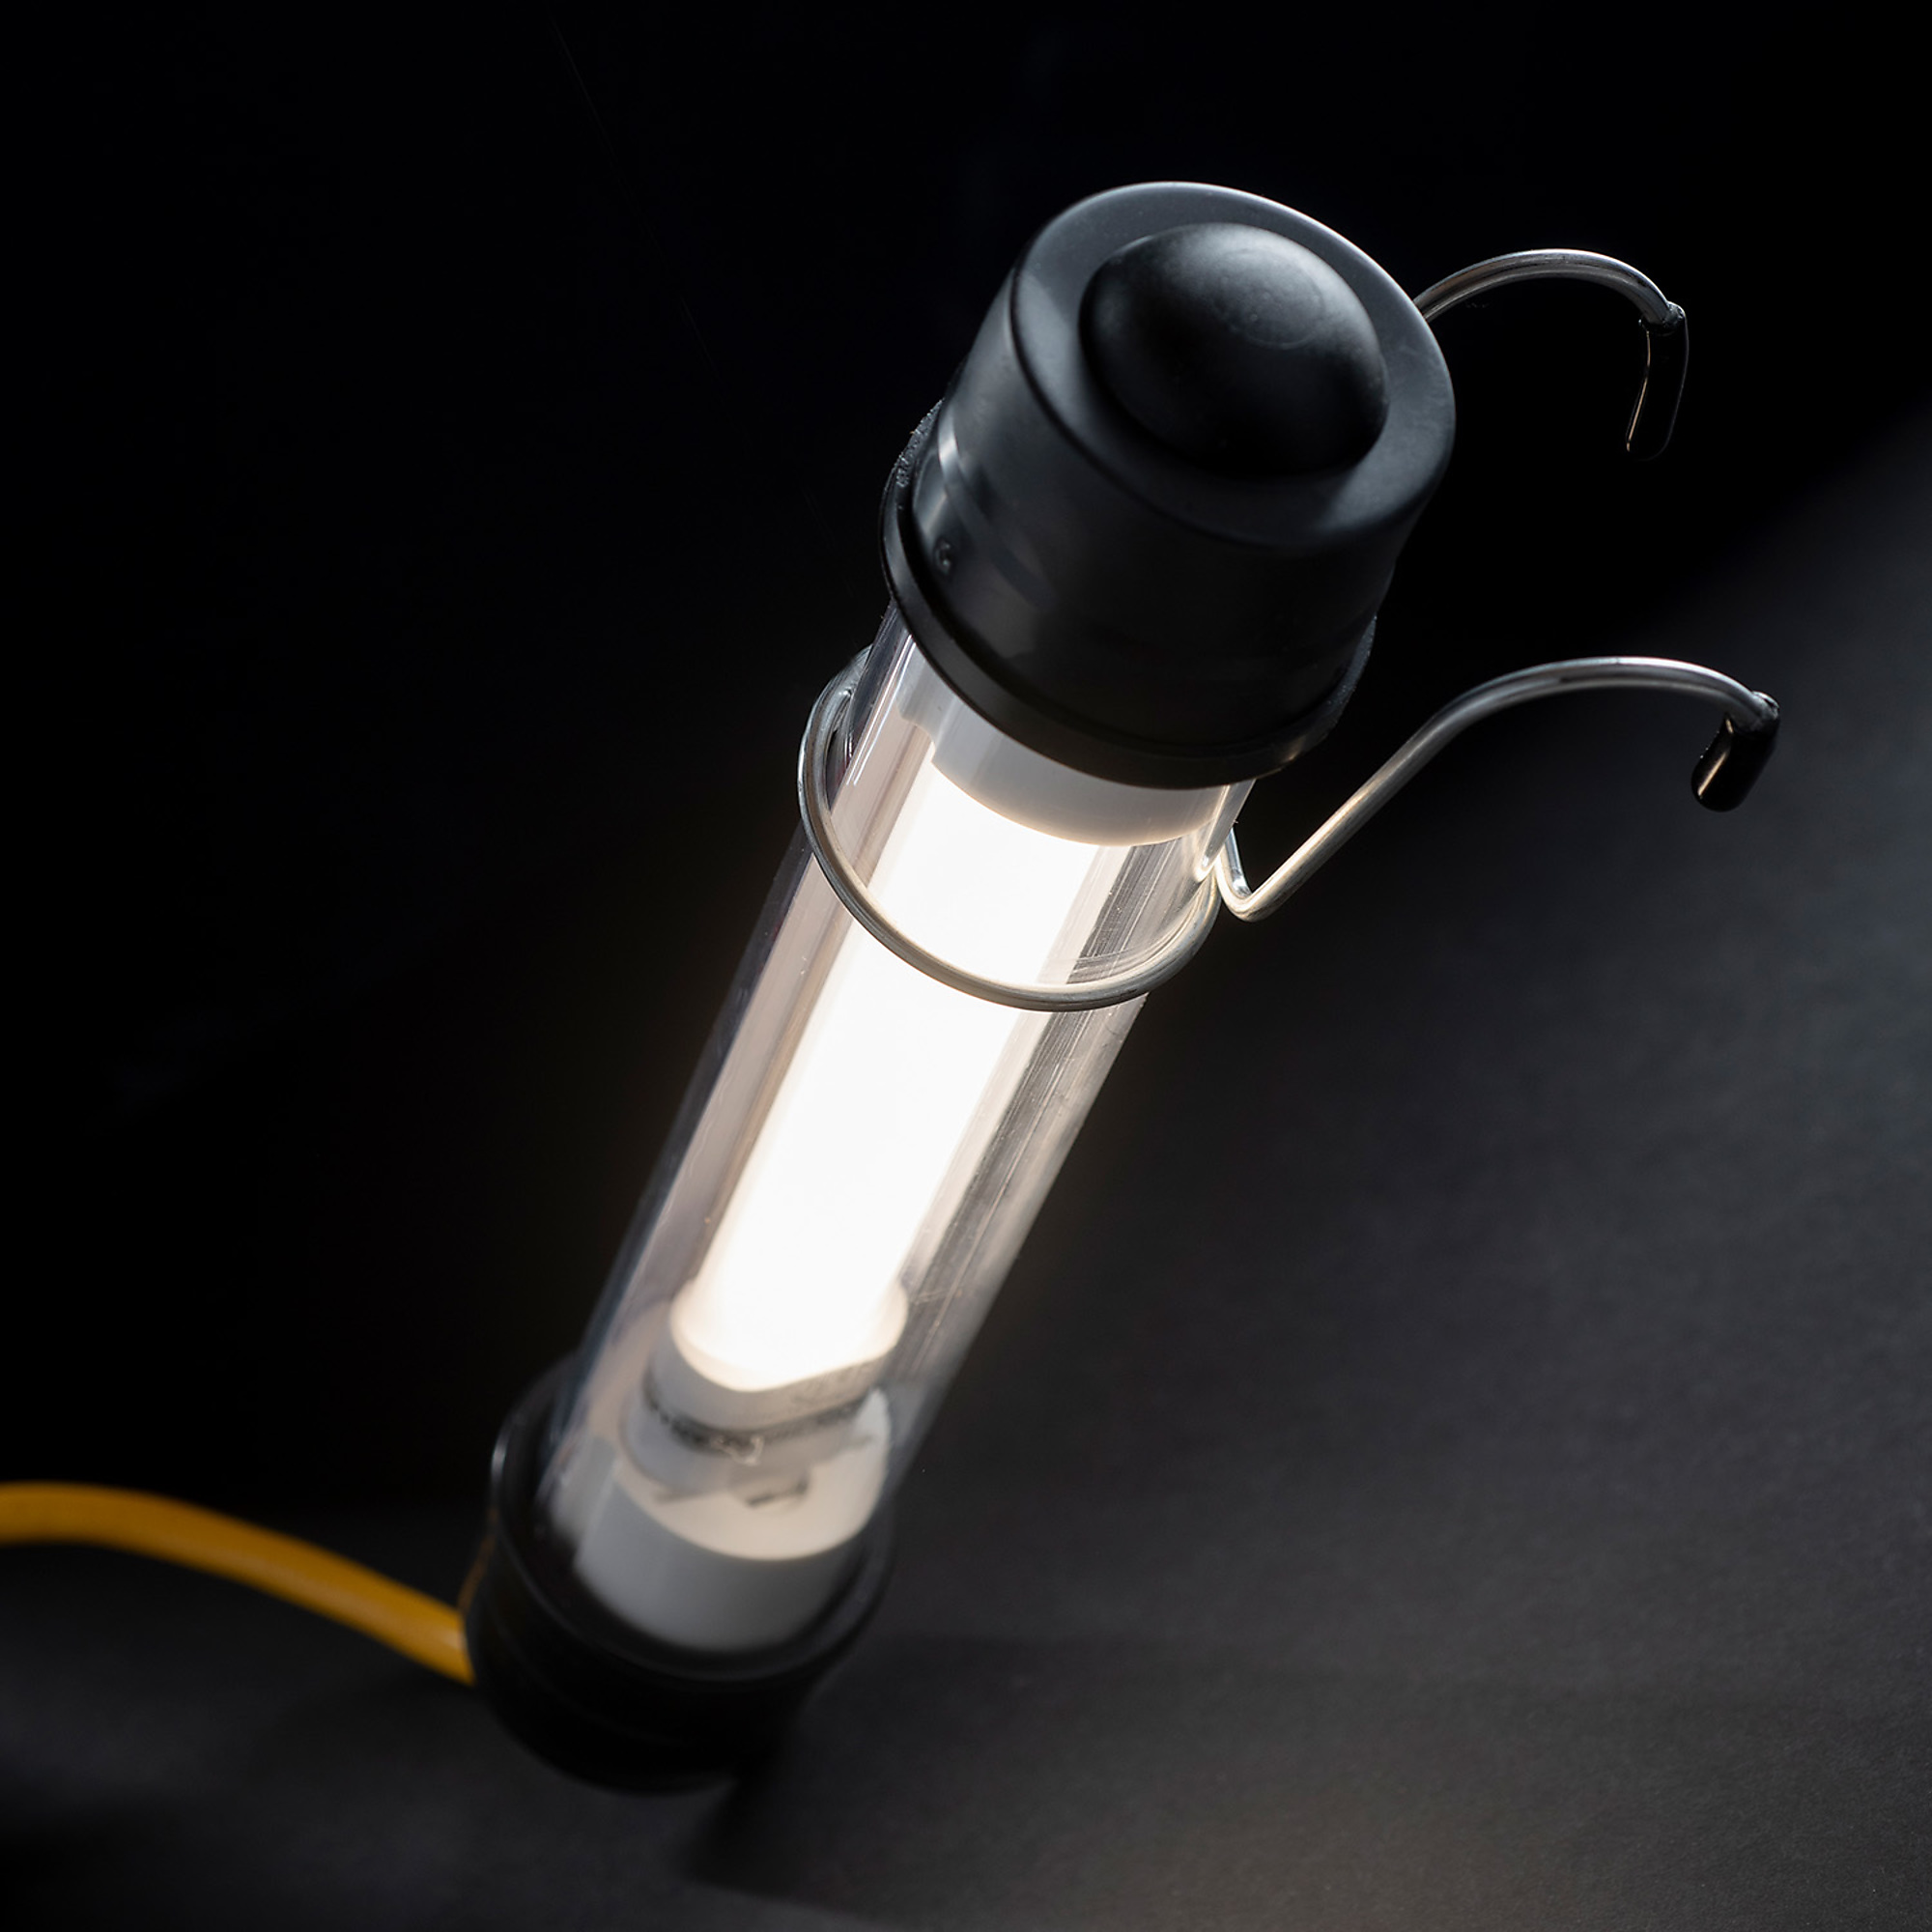 SAFTLITE, STUBBY HEADKIT, Light Type LED, Lens Color Clear, Included (qty.) 1, Model 5165-0223